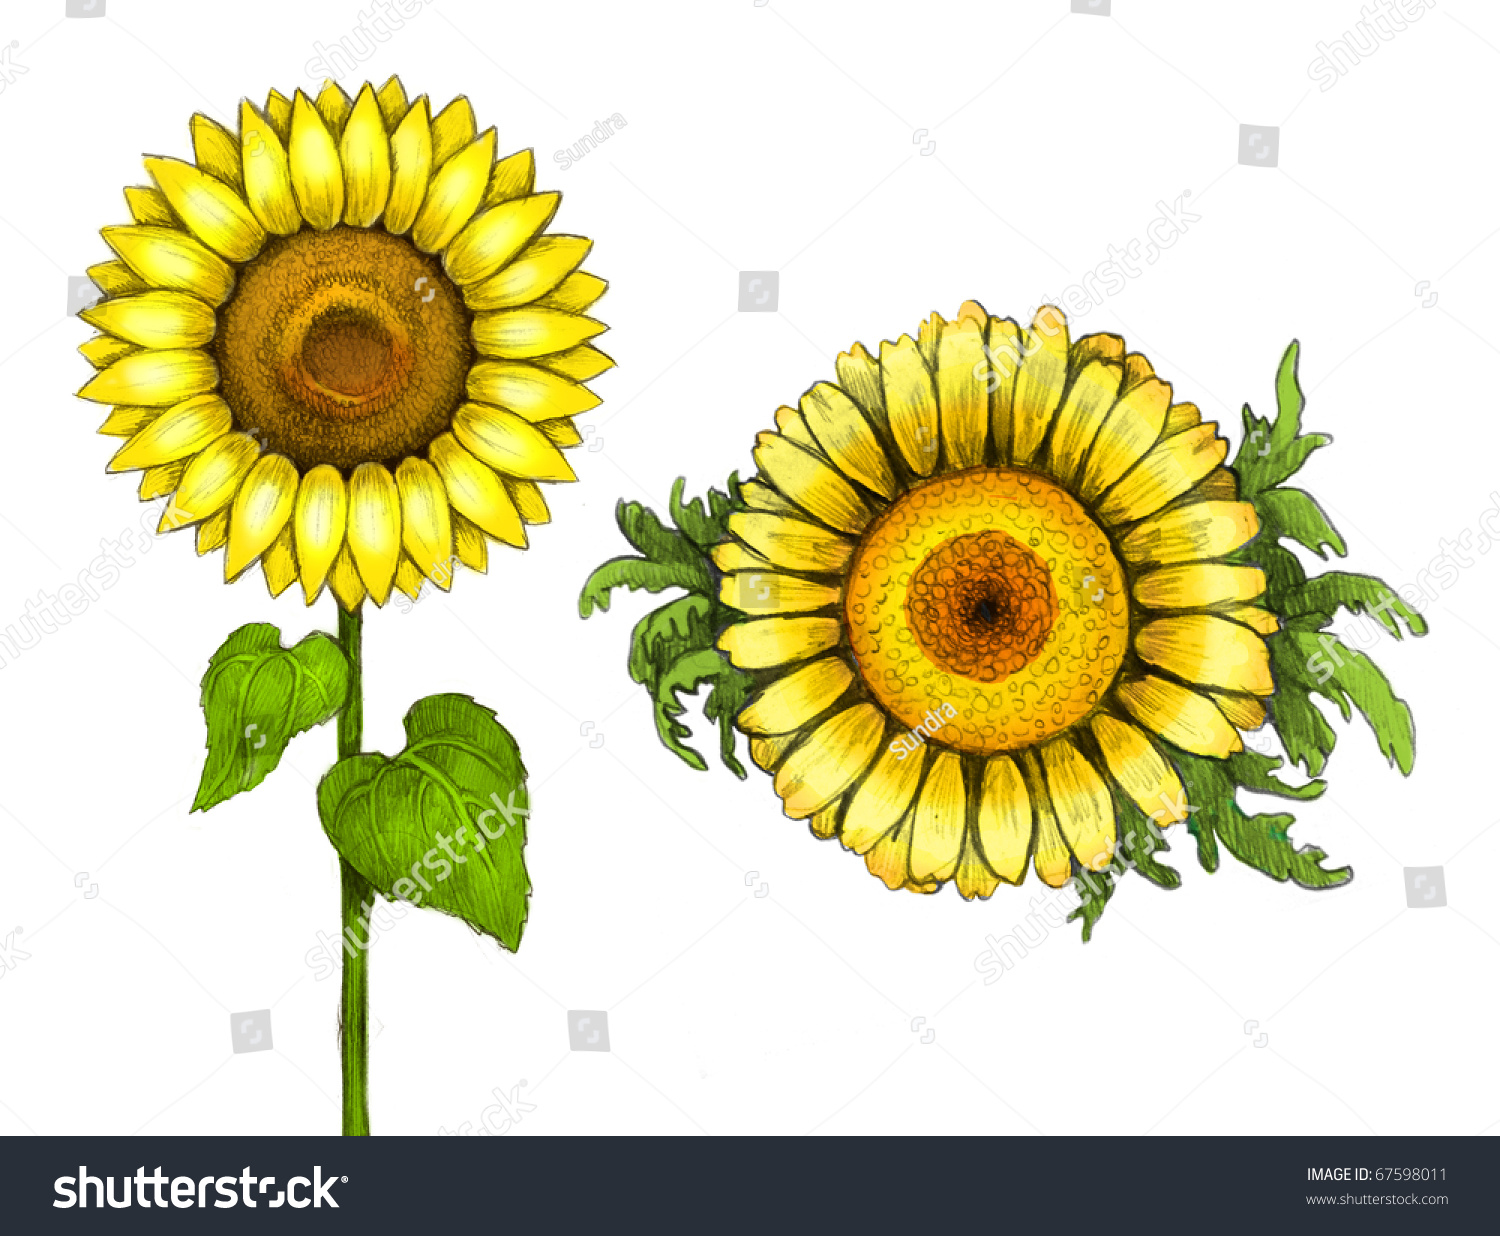 Drawings Of Sunflower Stock Photo 67598011 : Shutterstock